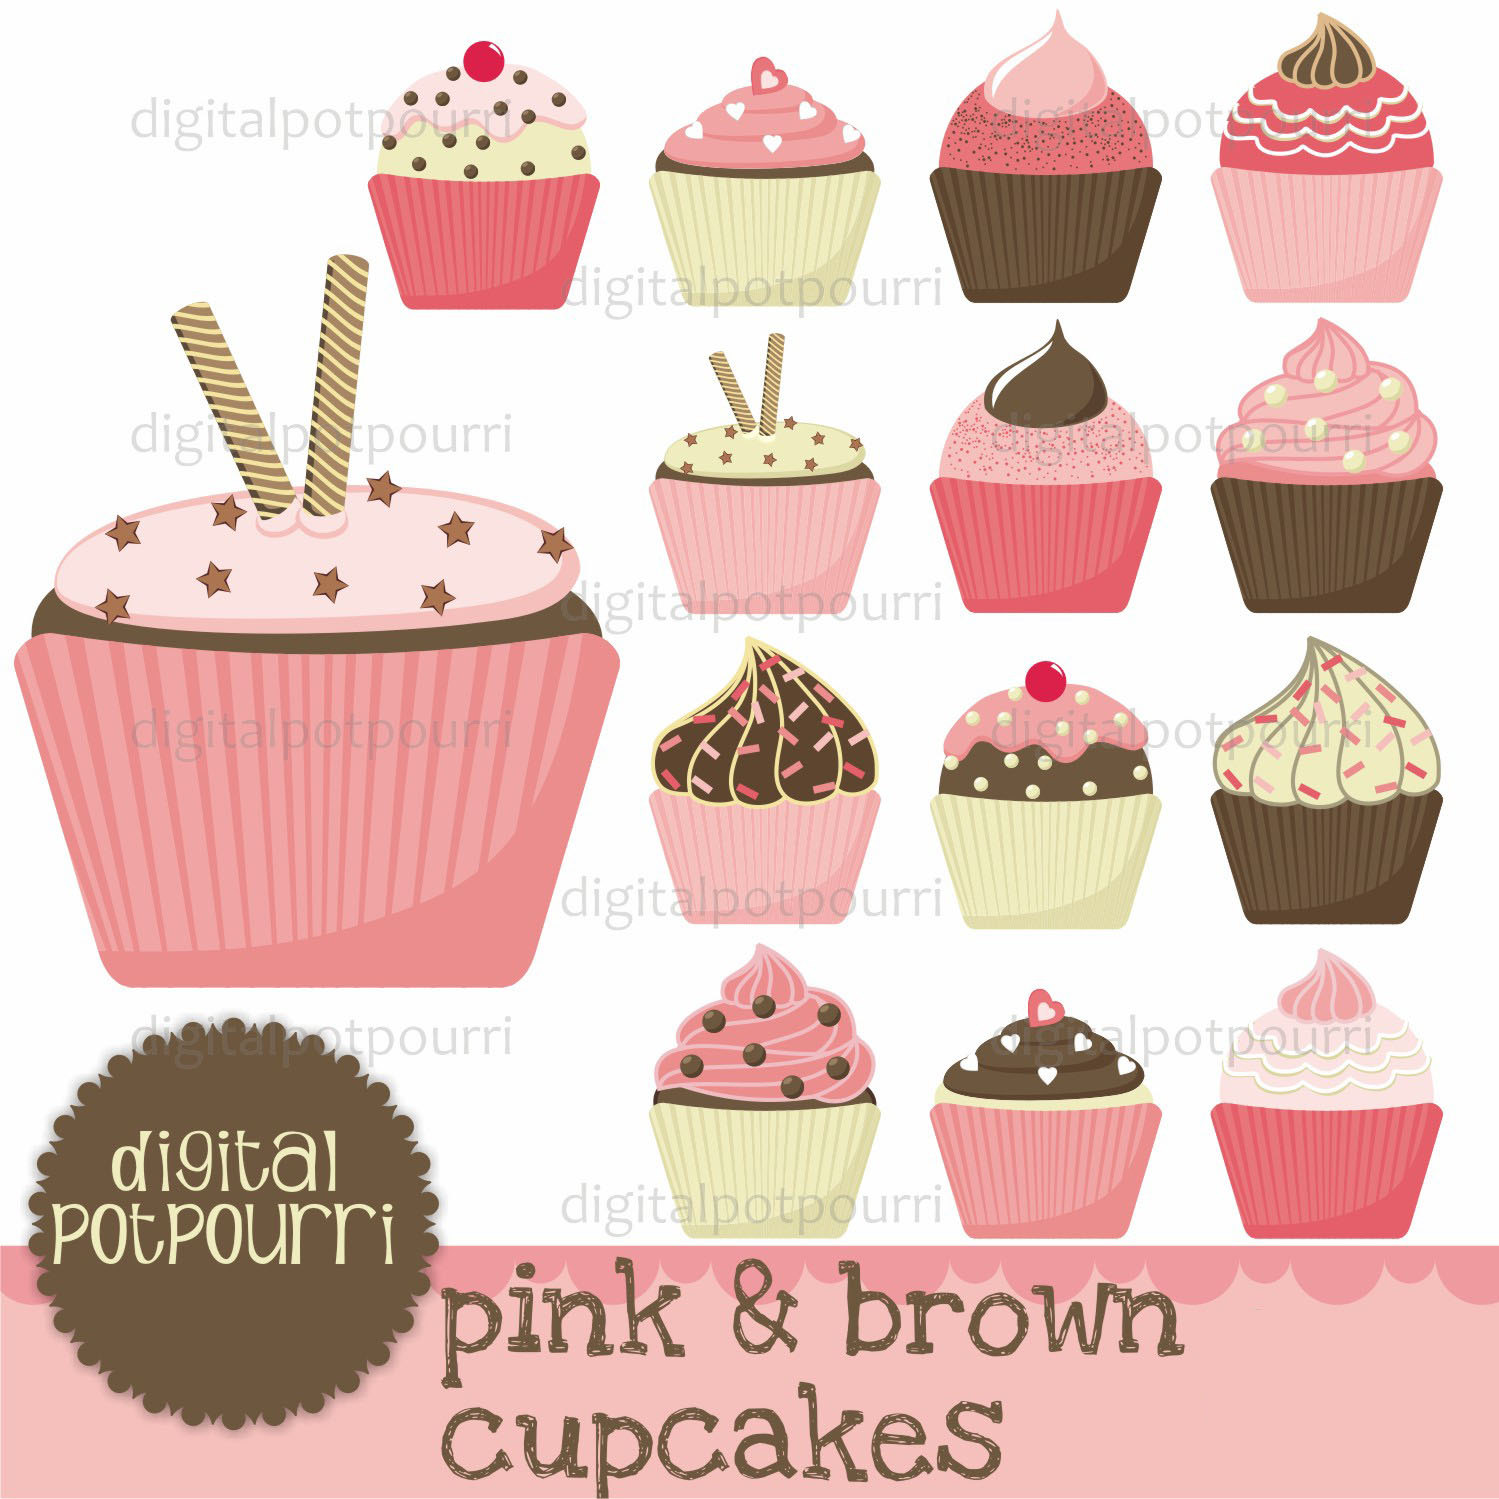 Pink Cupcake Clipart Buy2get1 Cupcakes Clipart Set